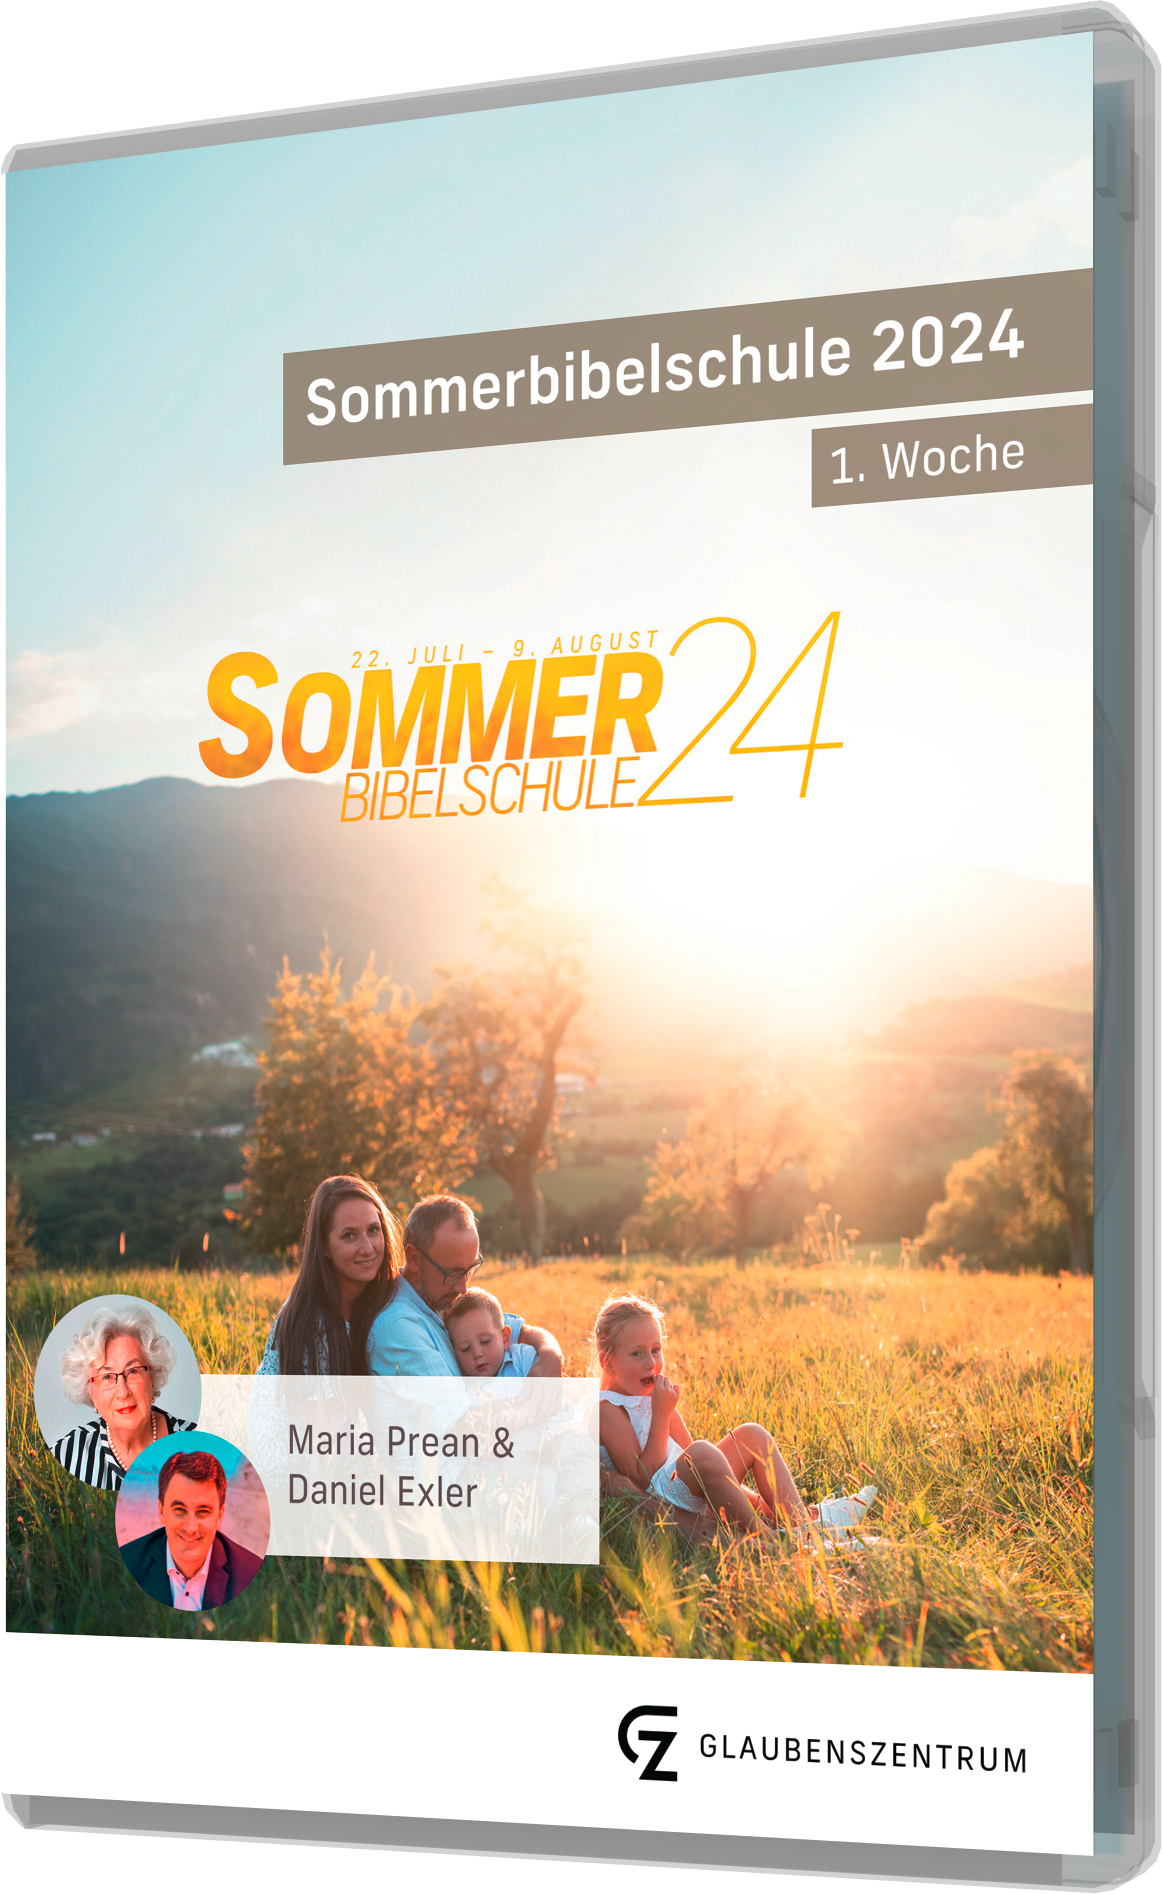 Sommerbibelschule 2024 - Woche 1 - Maria Prean, Daniel Exler